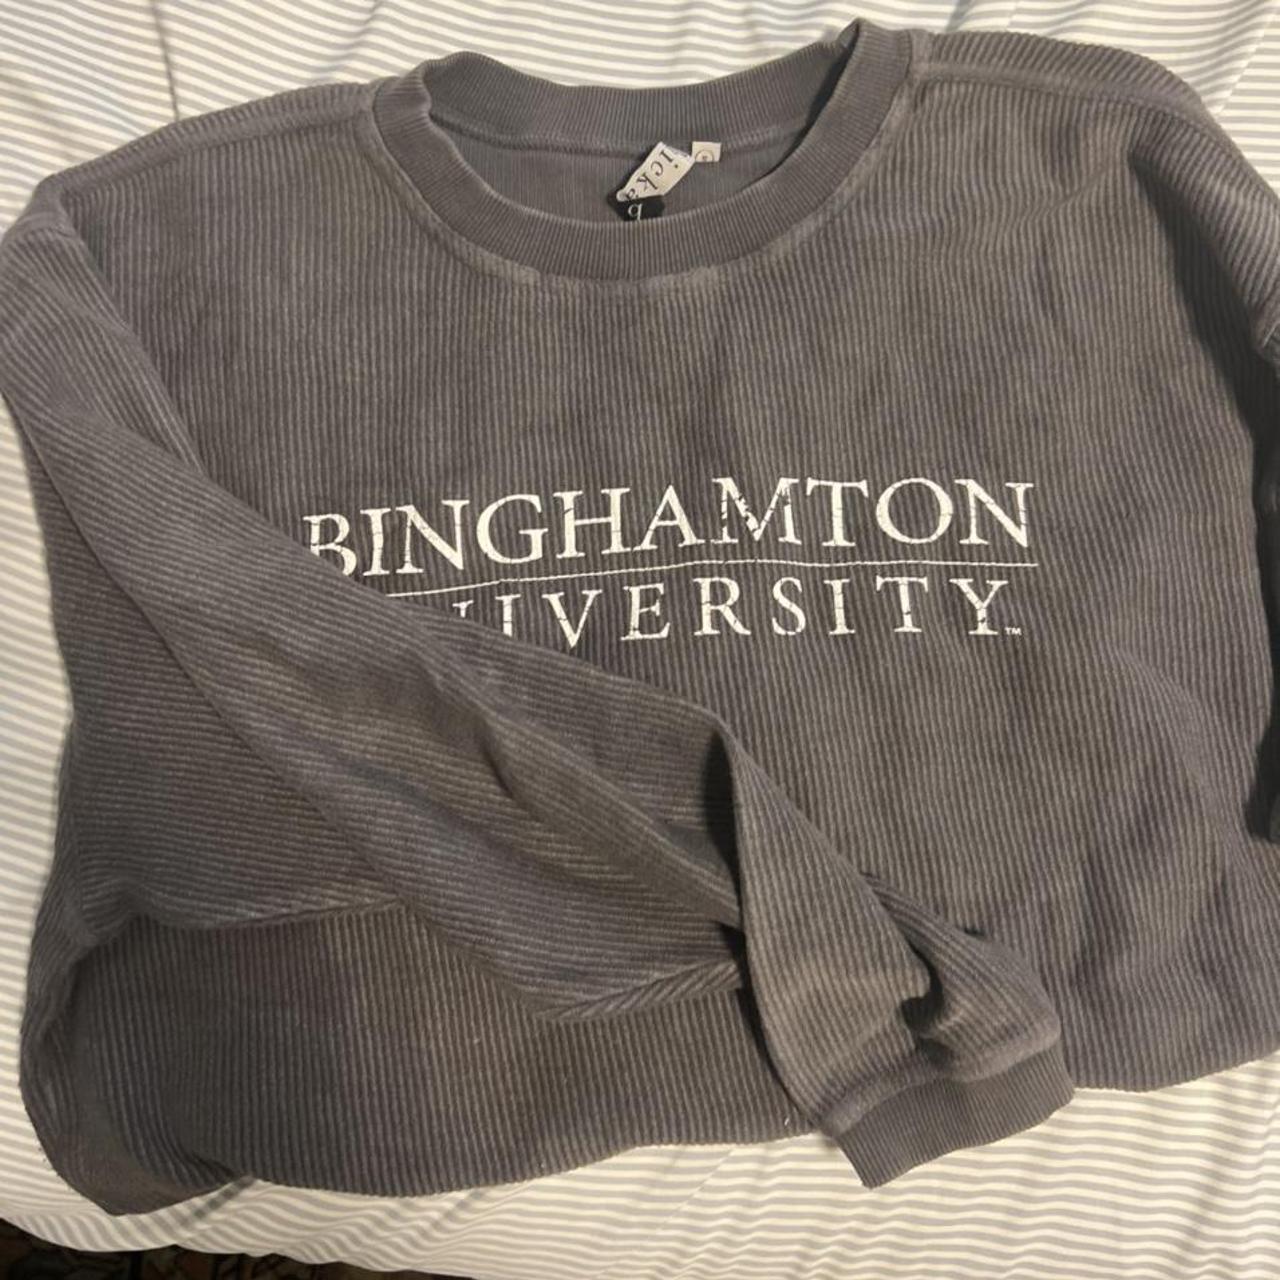 Product Image 1 - Binghamton University sweatshirt / pullover